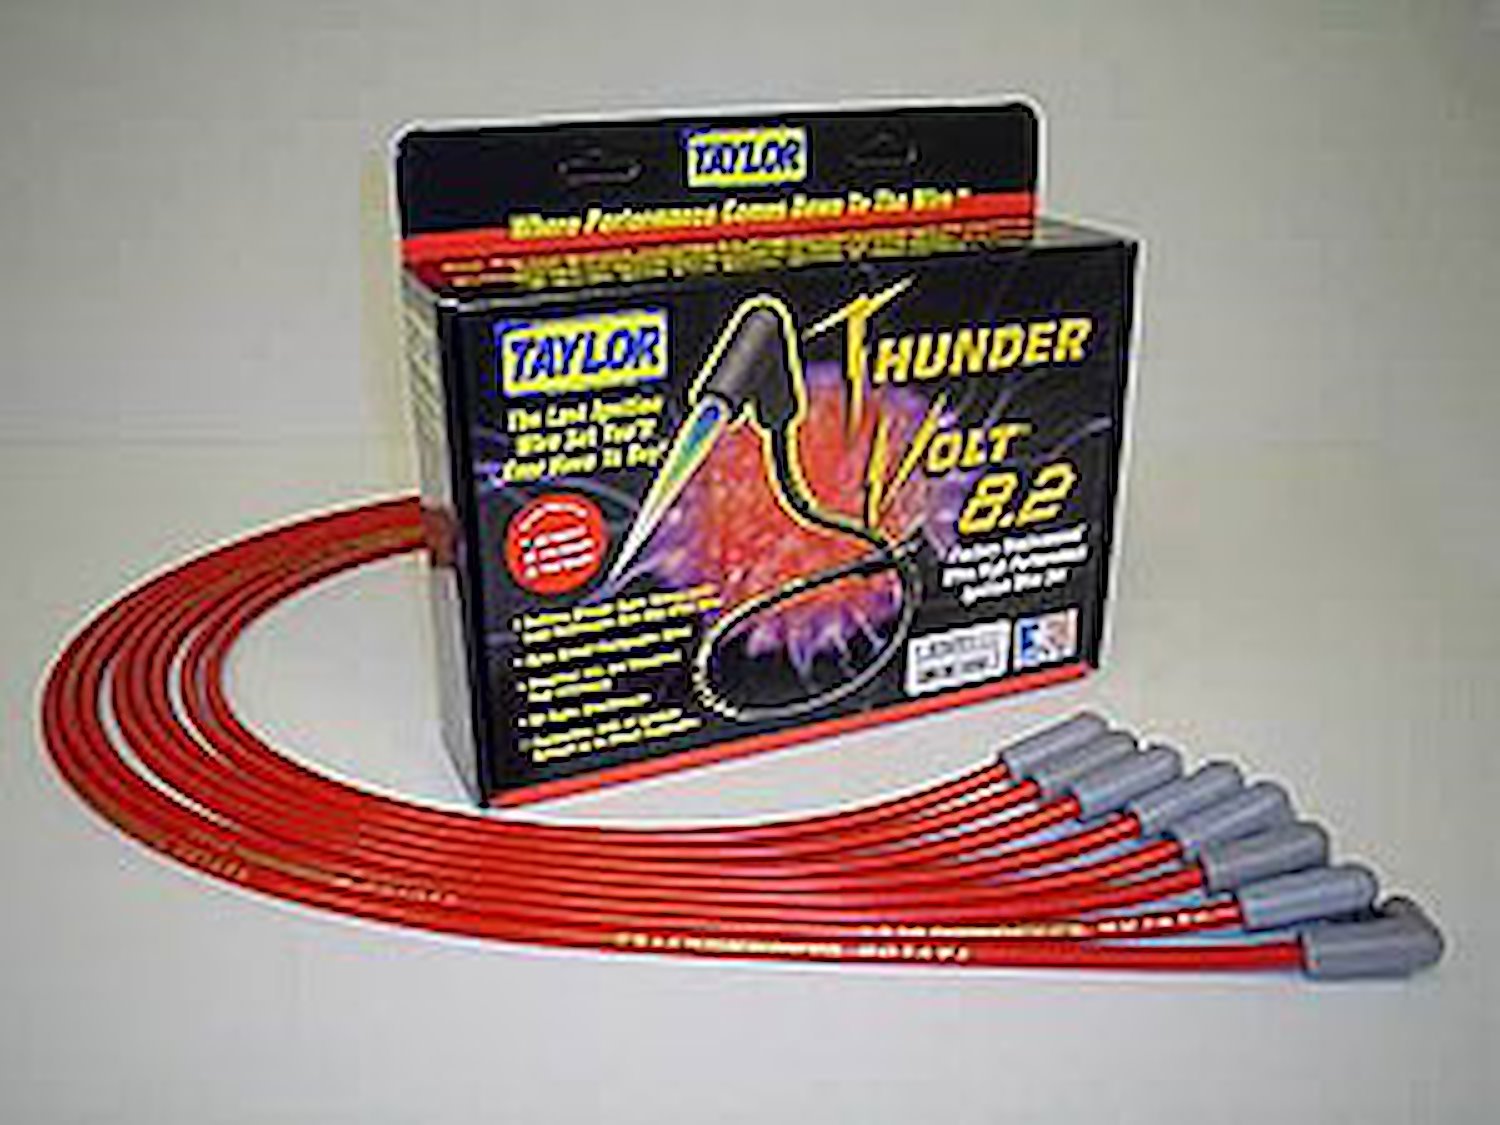 ThunderVolt 8.2mm Spark Plug Wires 1999-2002 Ford Contour/Mercury